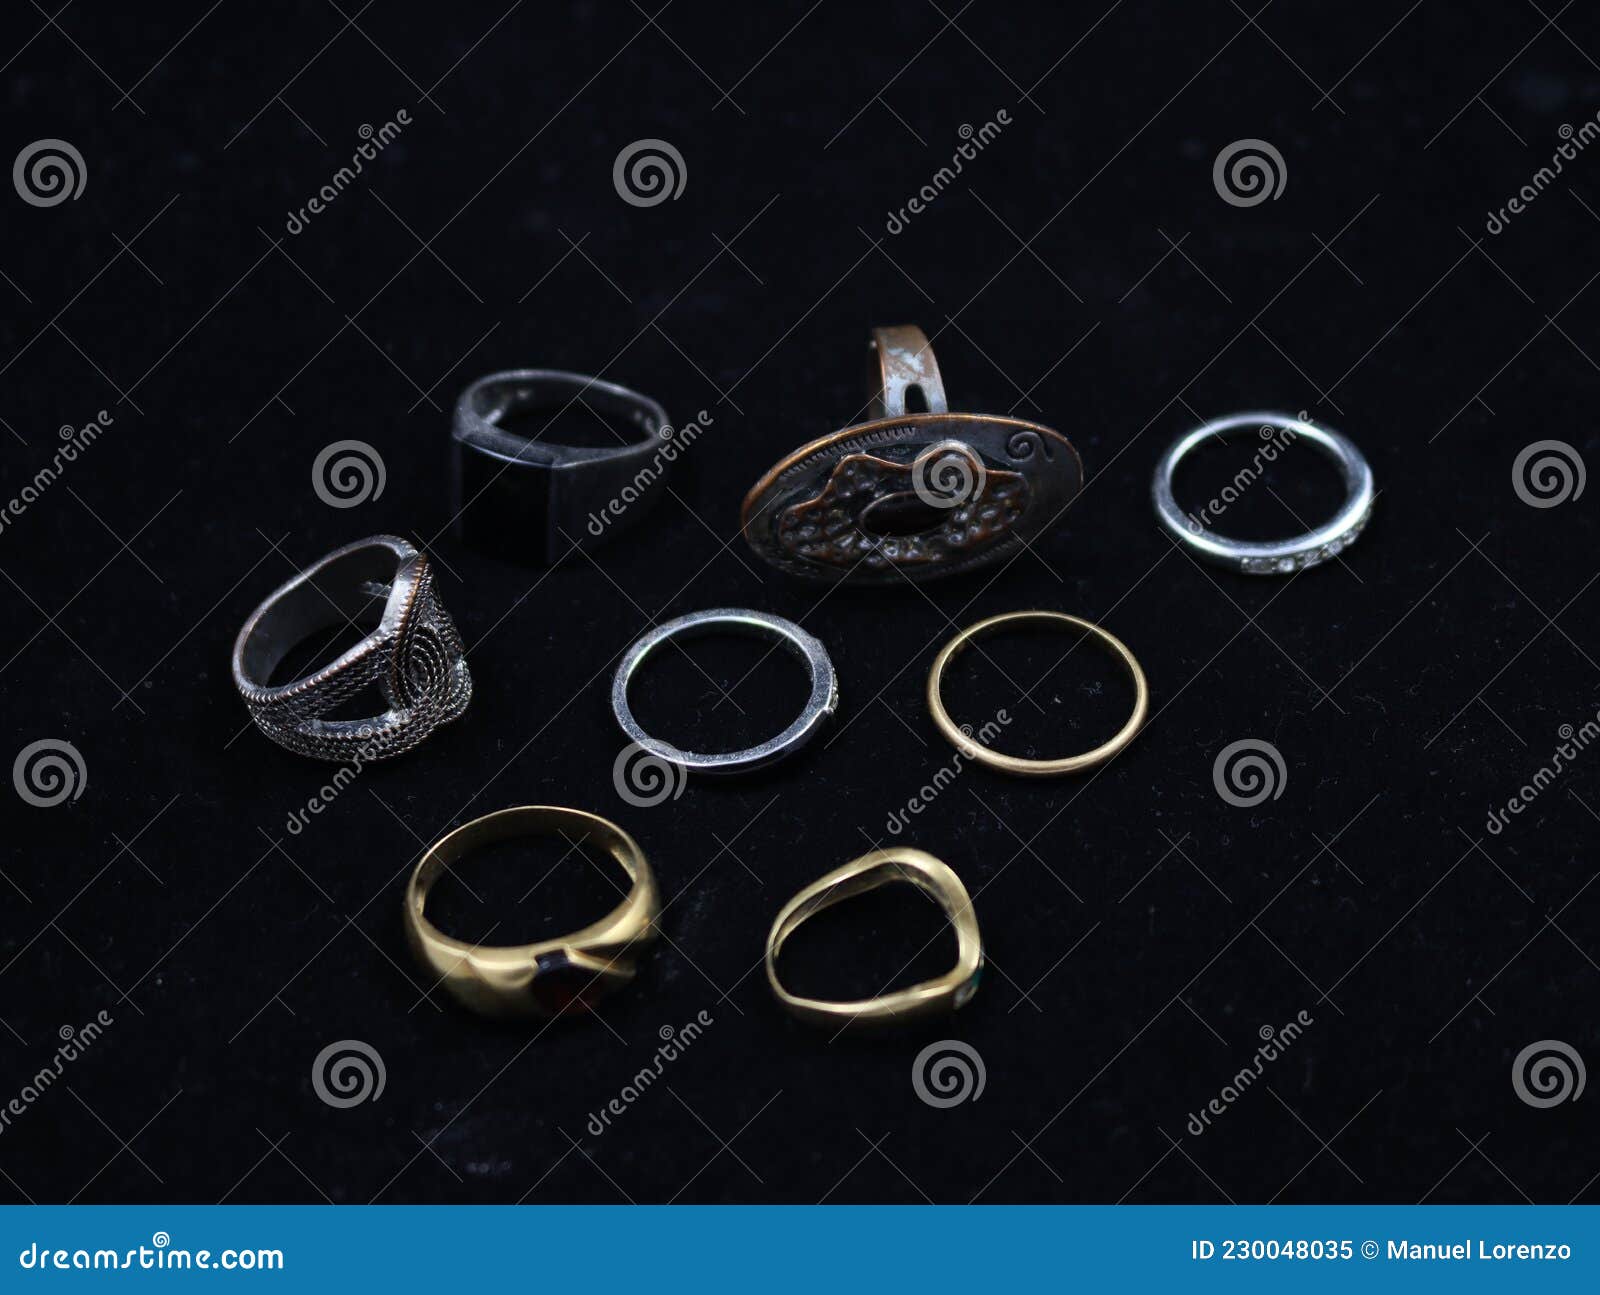 beautiful rings alliances metals decoration finger ornaments